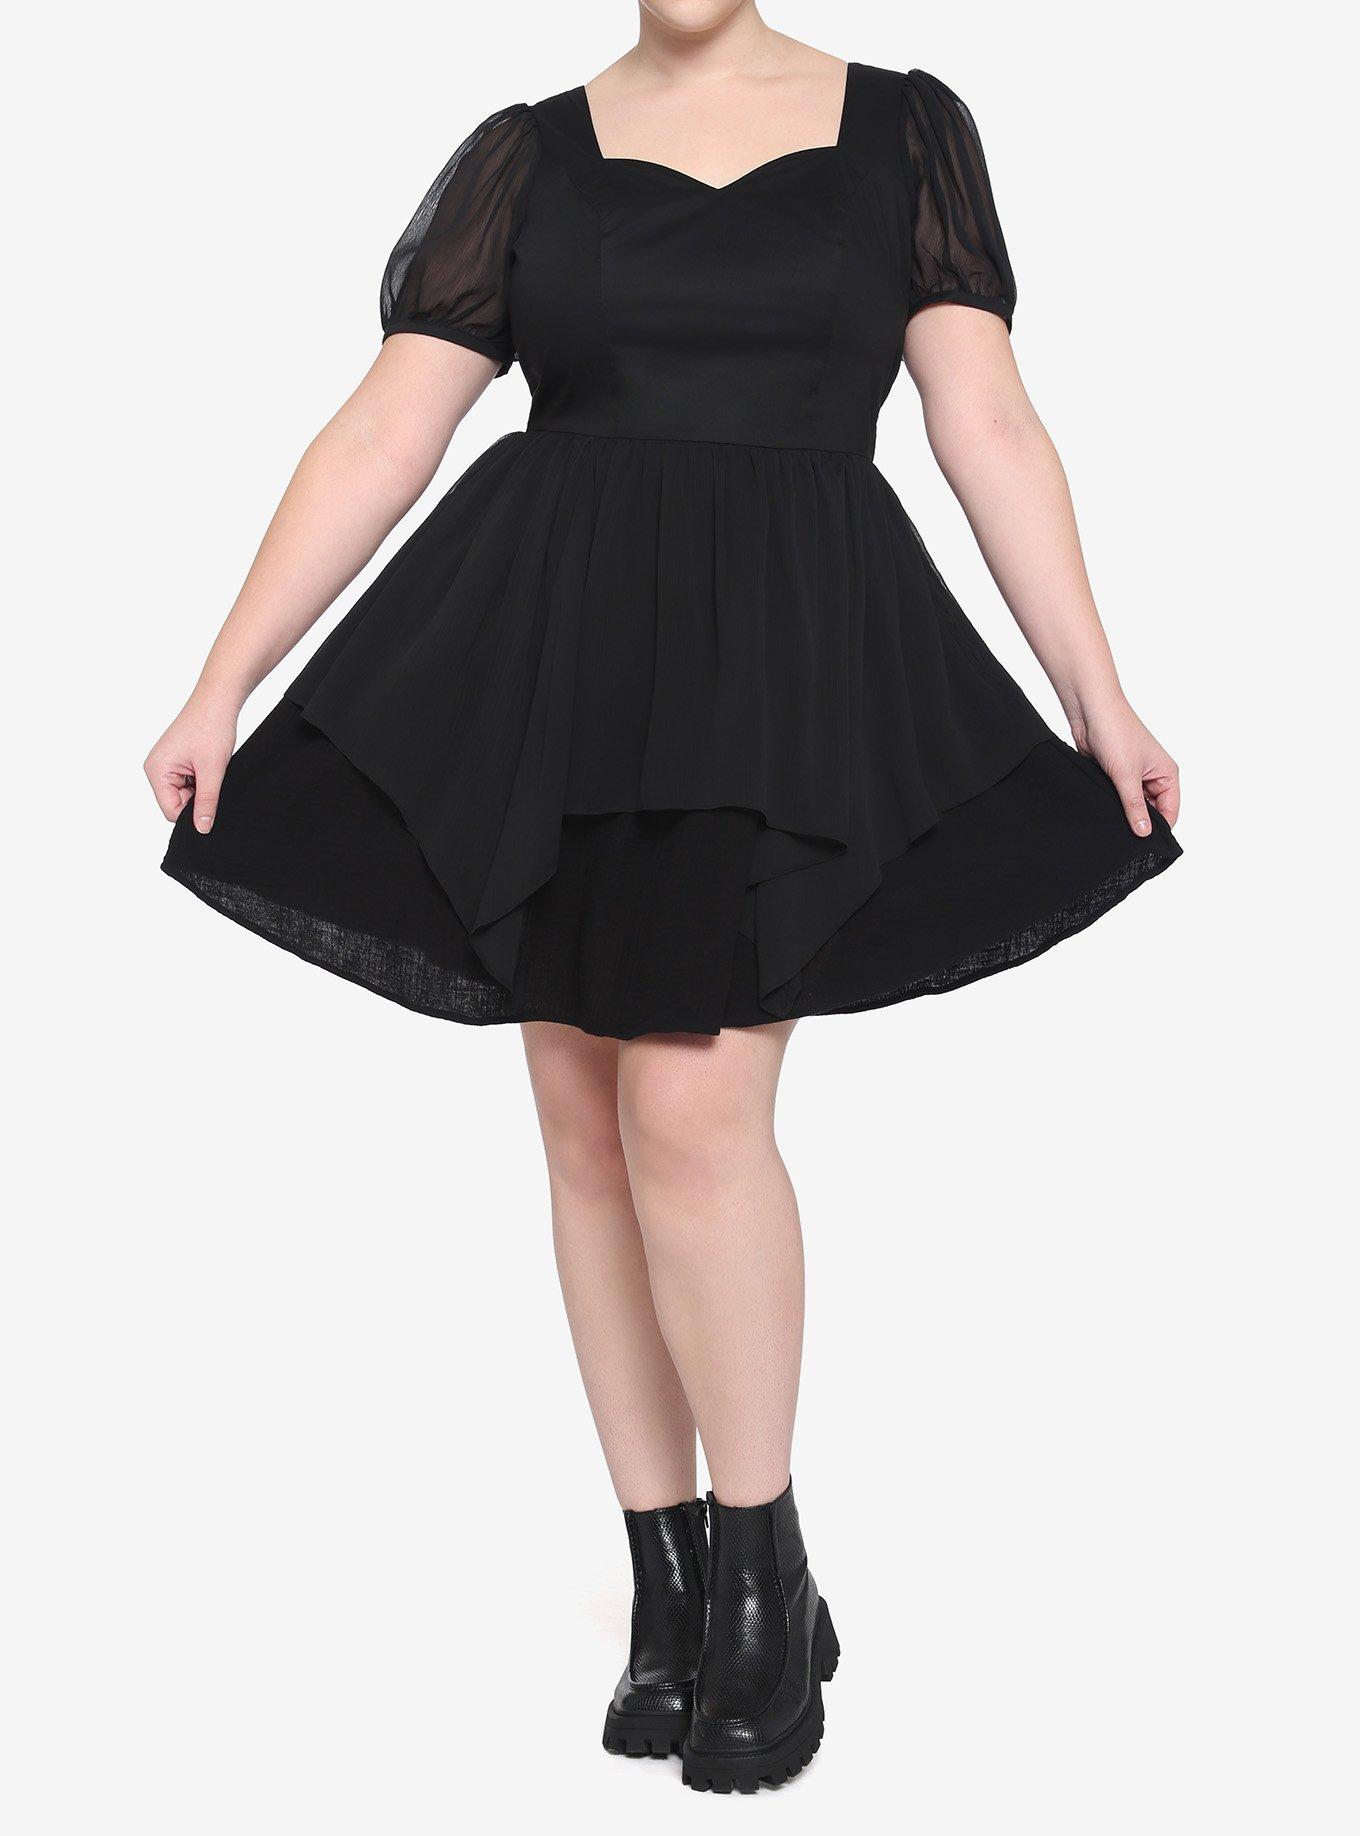 Black Sweetheart Lace-Up Back Dress Plus Size, BLACK, alternate